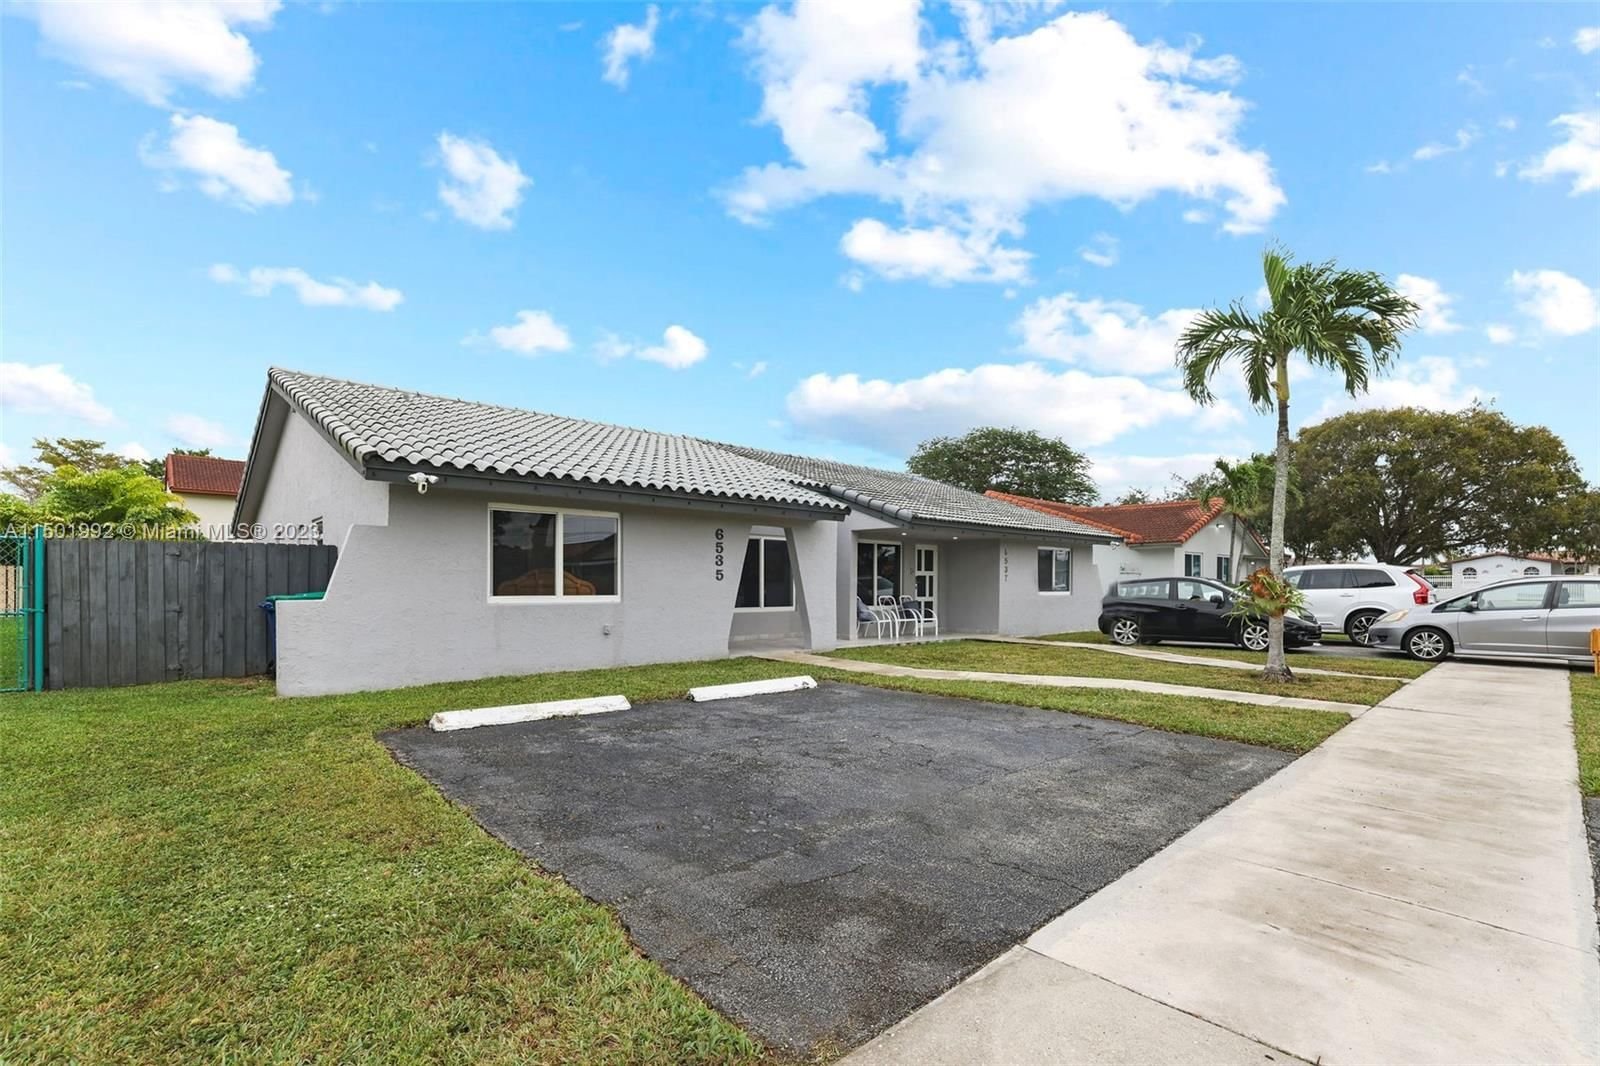 Real estate property located at 6535 135th Ave I-N, Miami-Dade County, ARBORGATE KENDALL LK E CO, Miami, FL